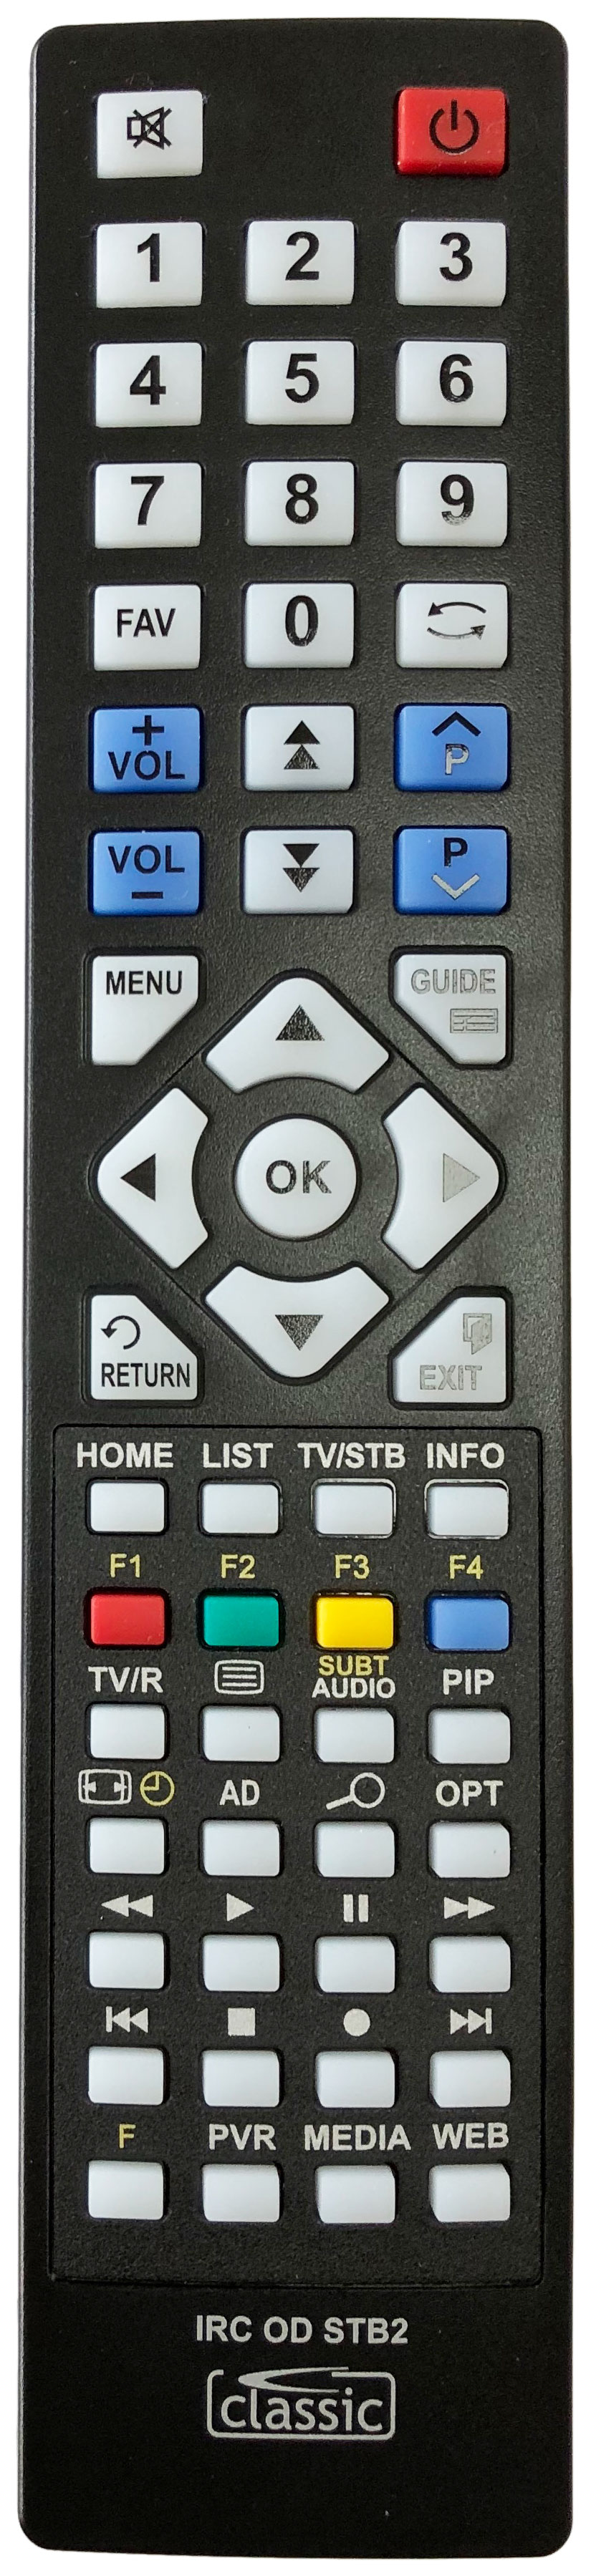 LOGISAT 1100 HD Remote Control Alternative